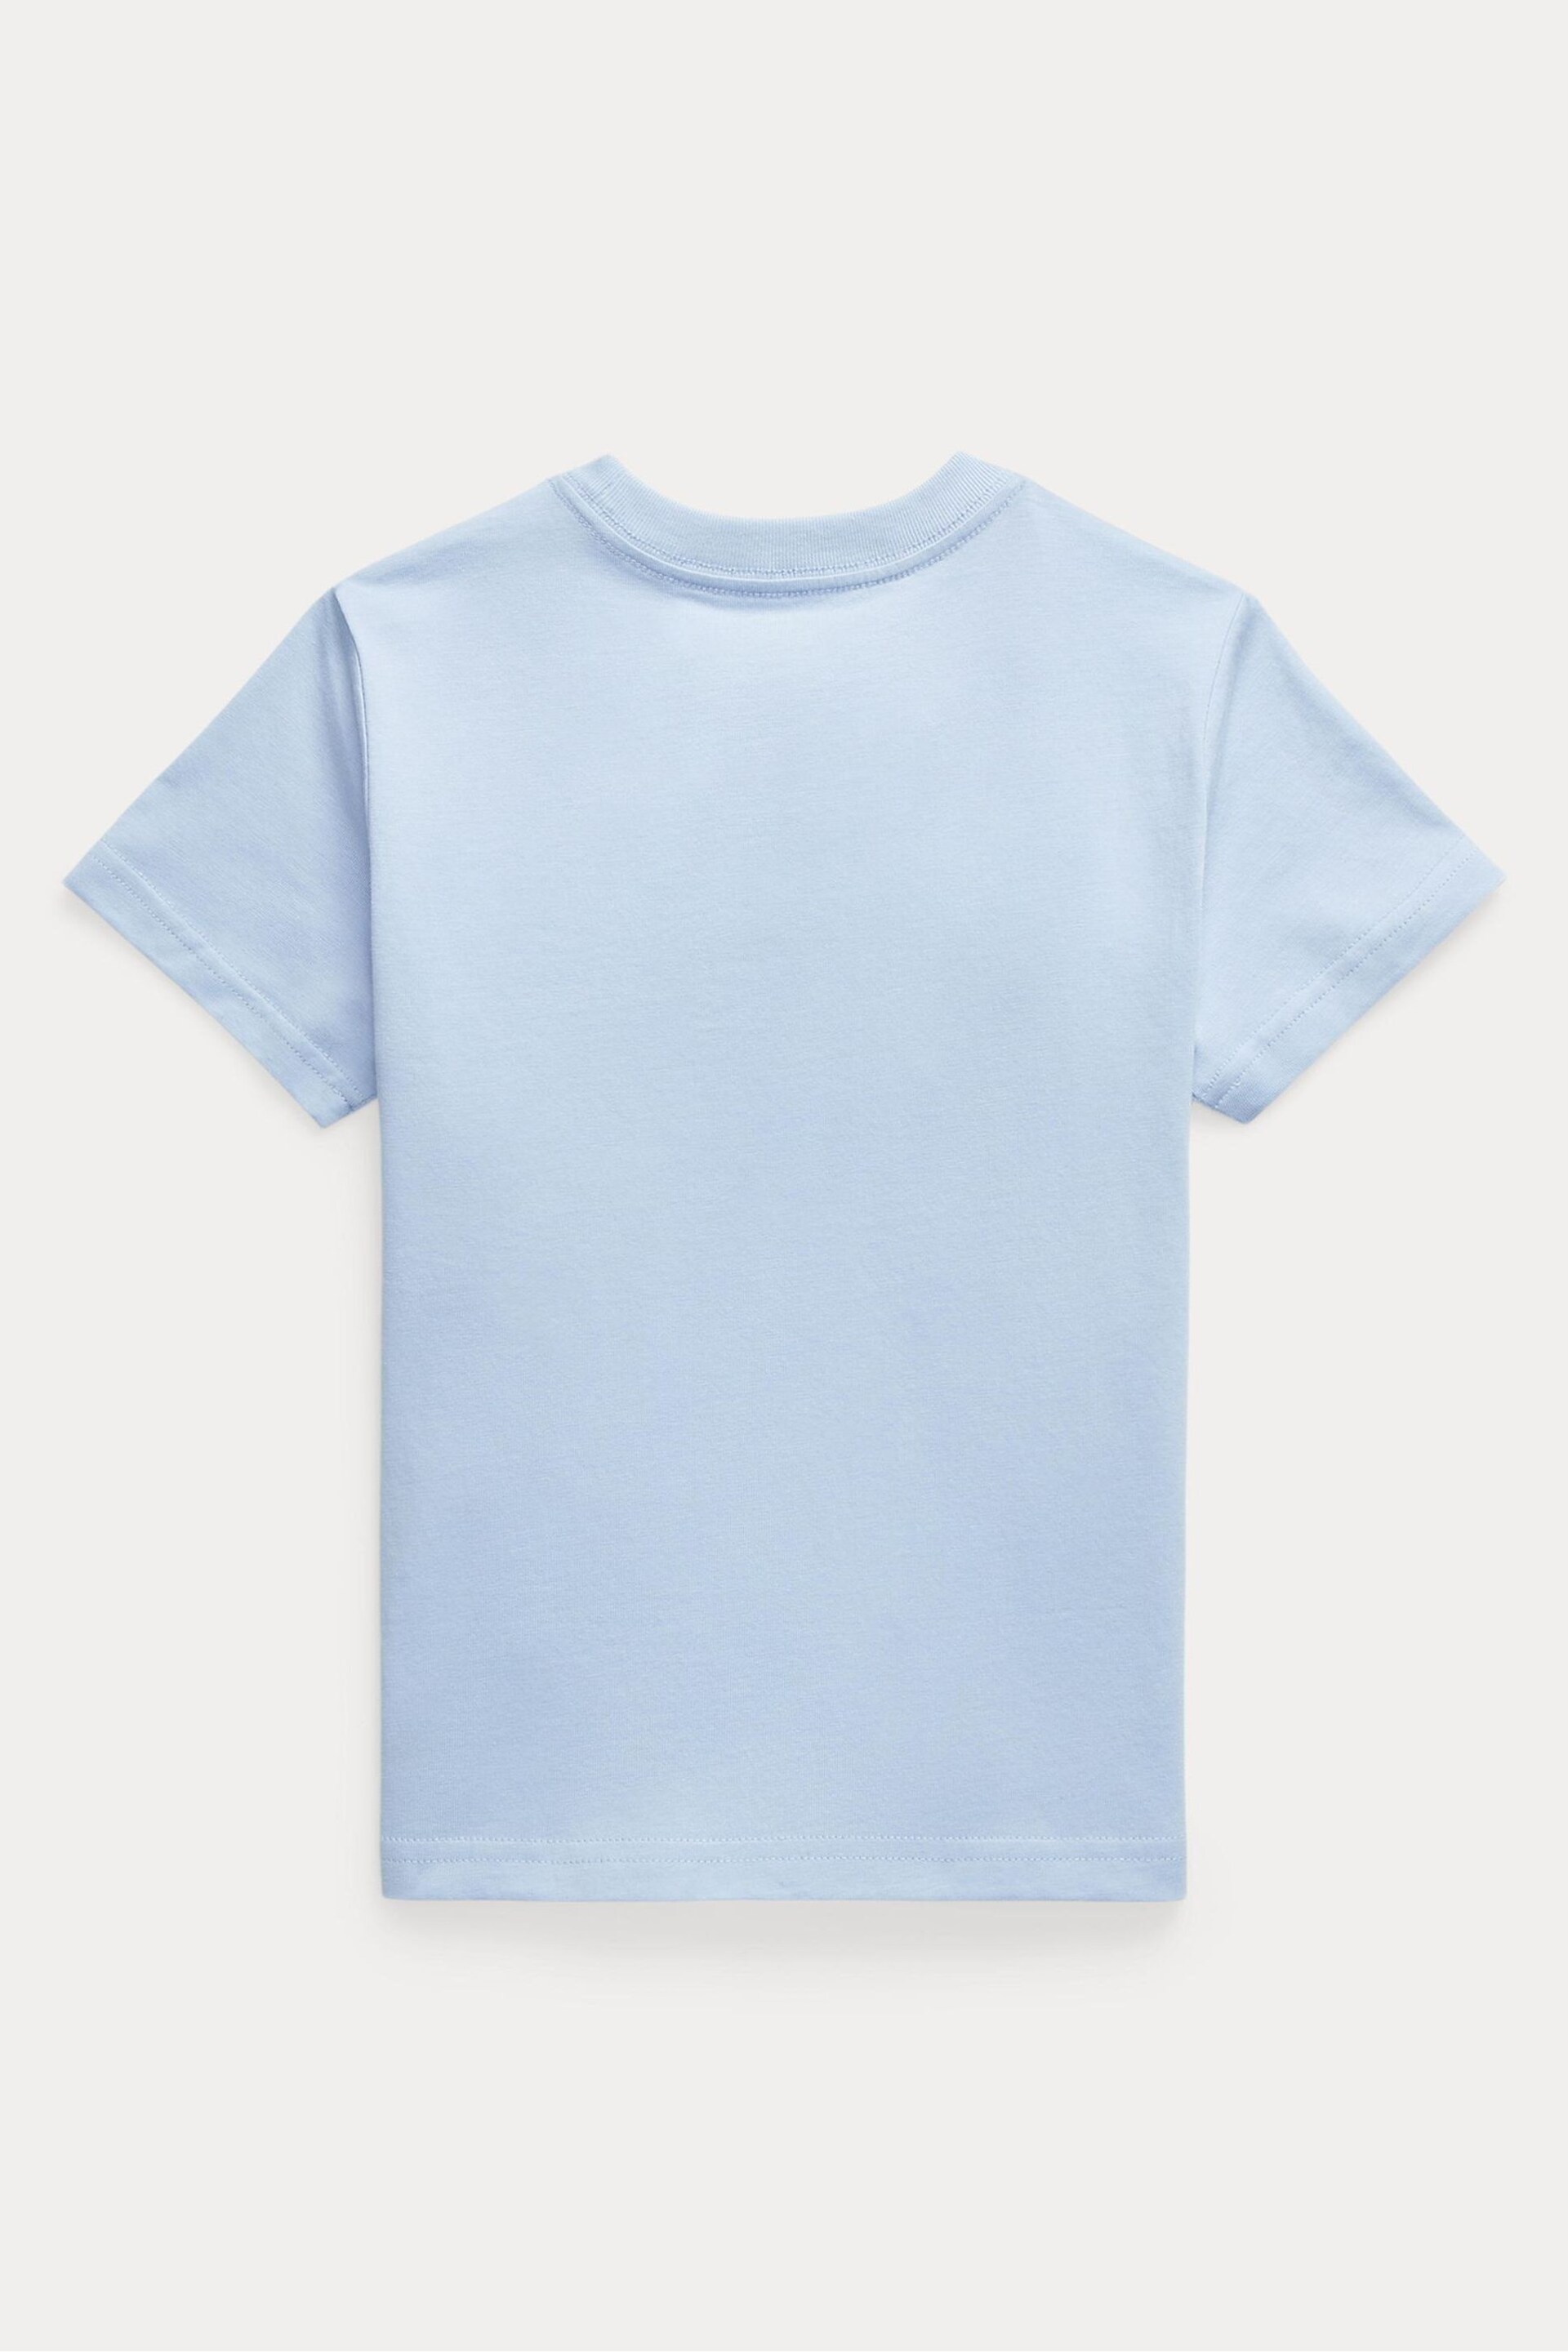 Polo Ralph Lauren Boys Cotton Jersey Crew Neck T-Shirt - Image 2 of 4